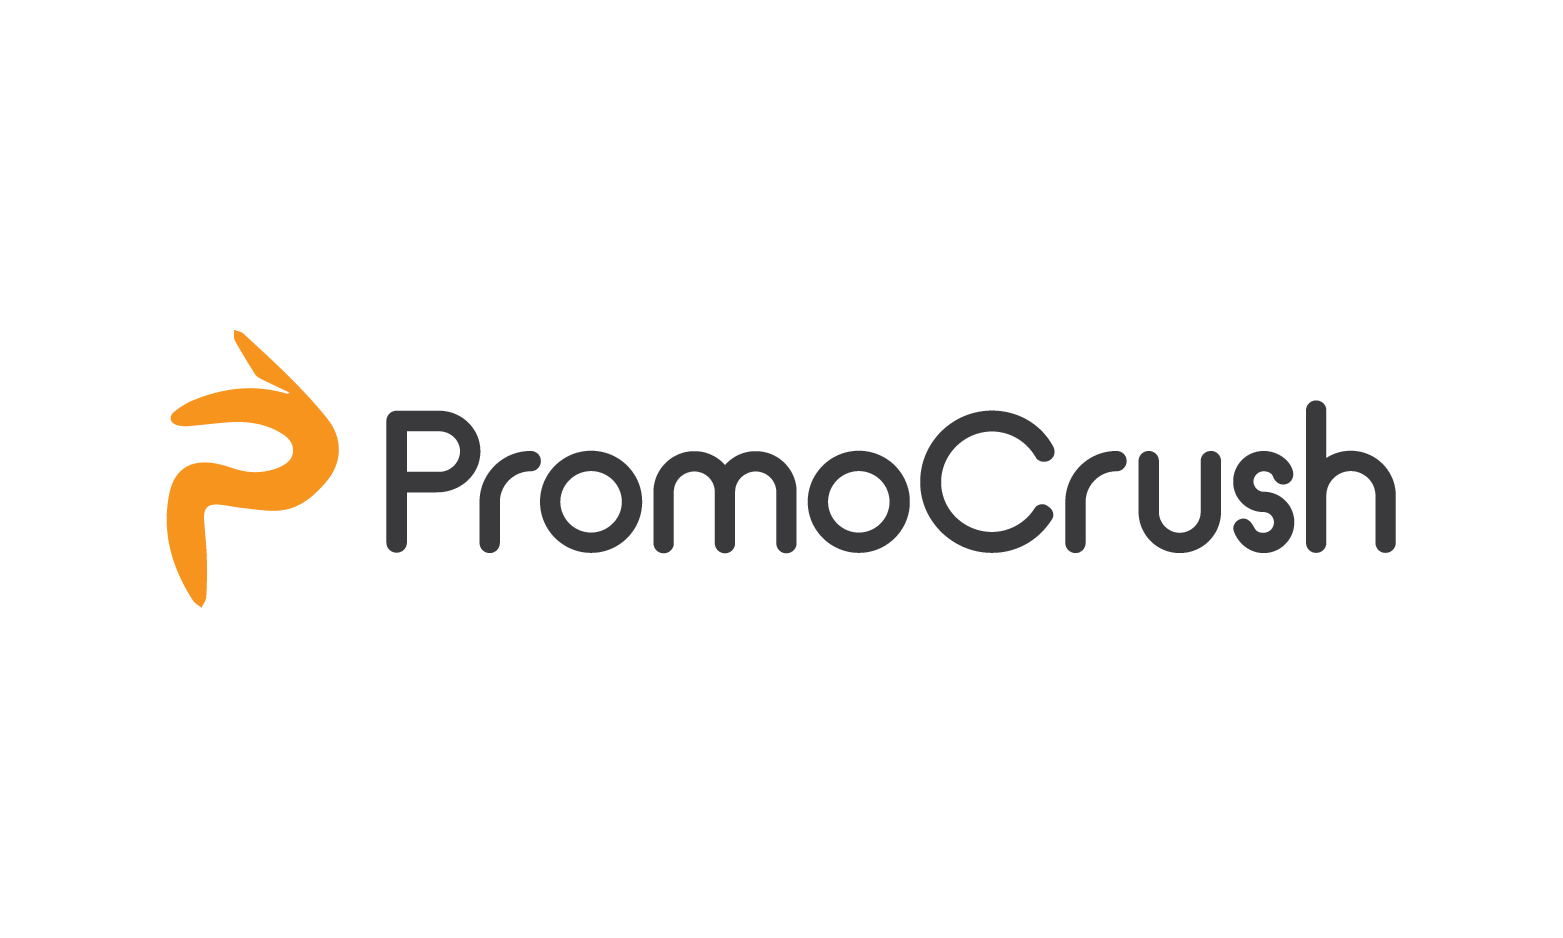 PromoCrush.com - Creative brandable domain for sale